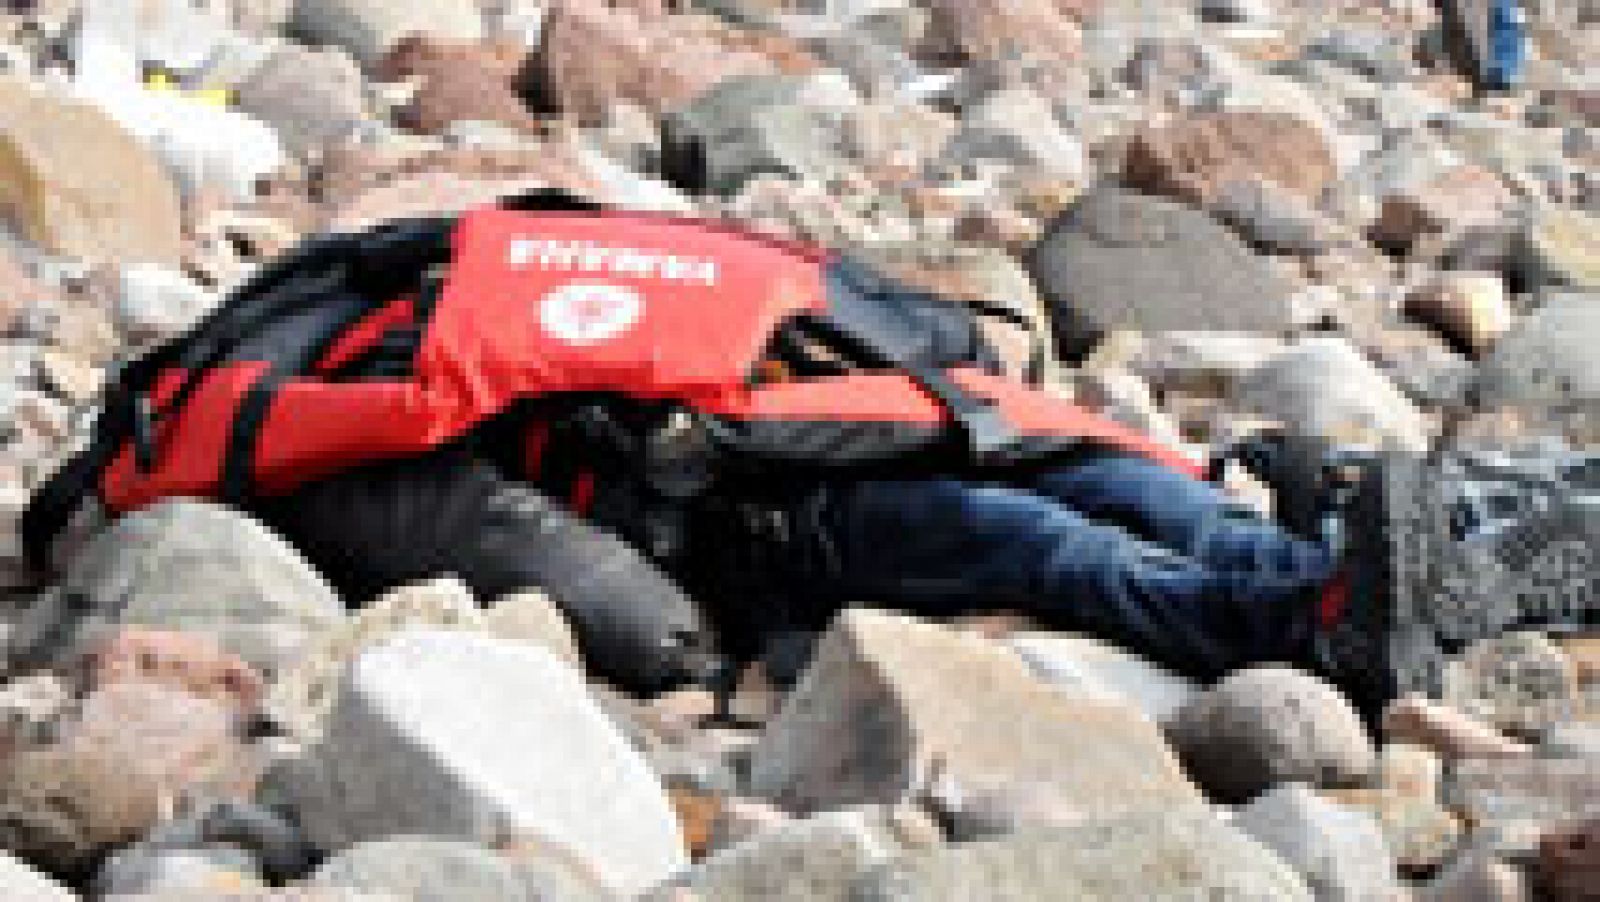 Telediario 1: Un barco lleno de refugiados ha naufragado frente a Turquía | RTVE Play